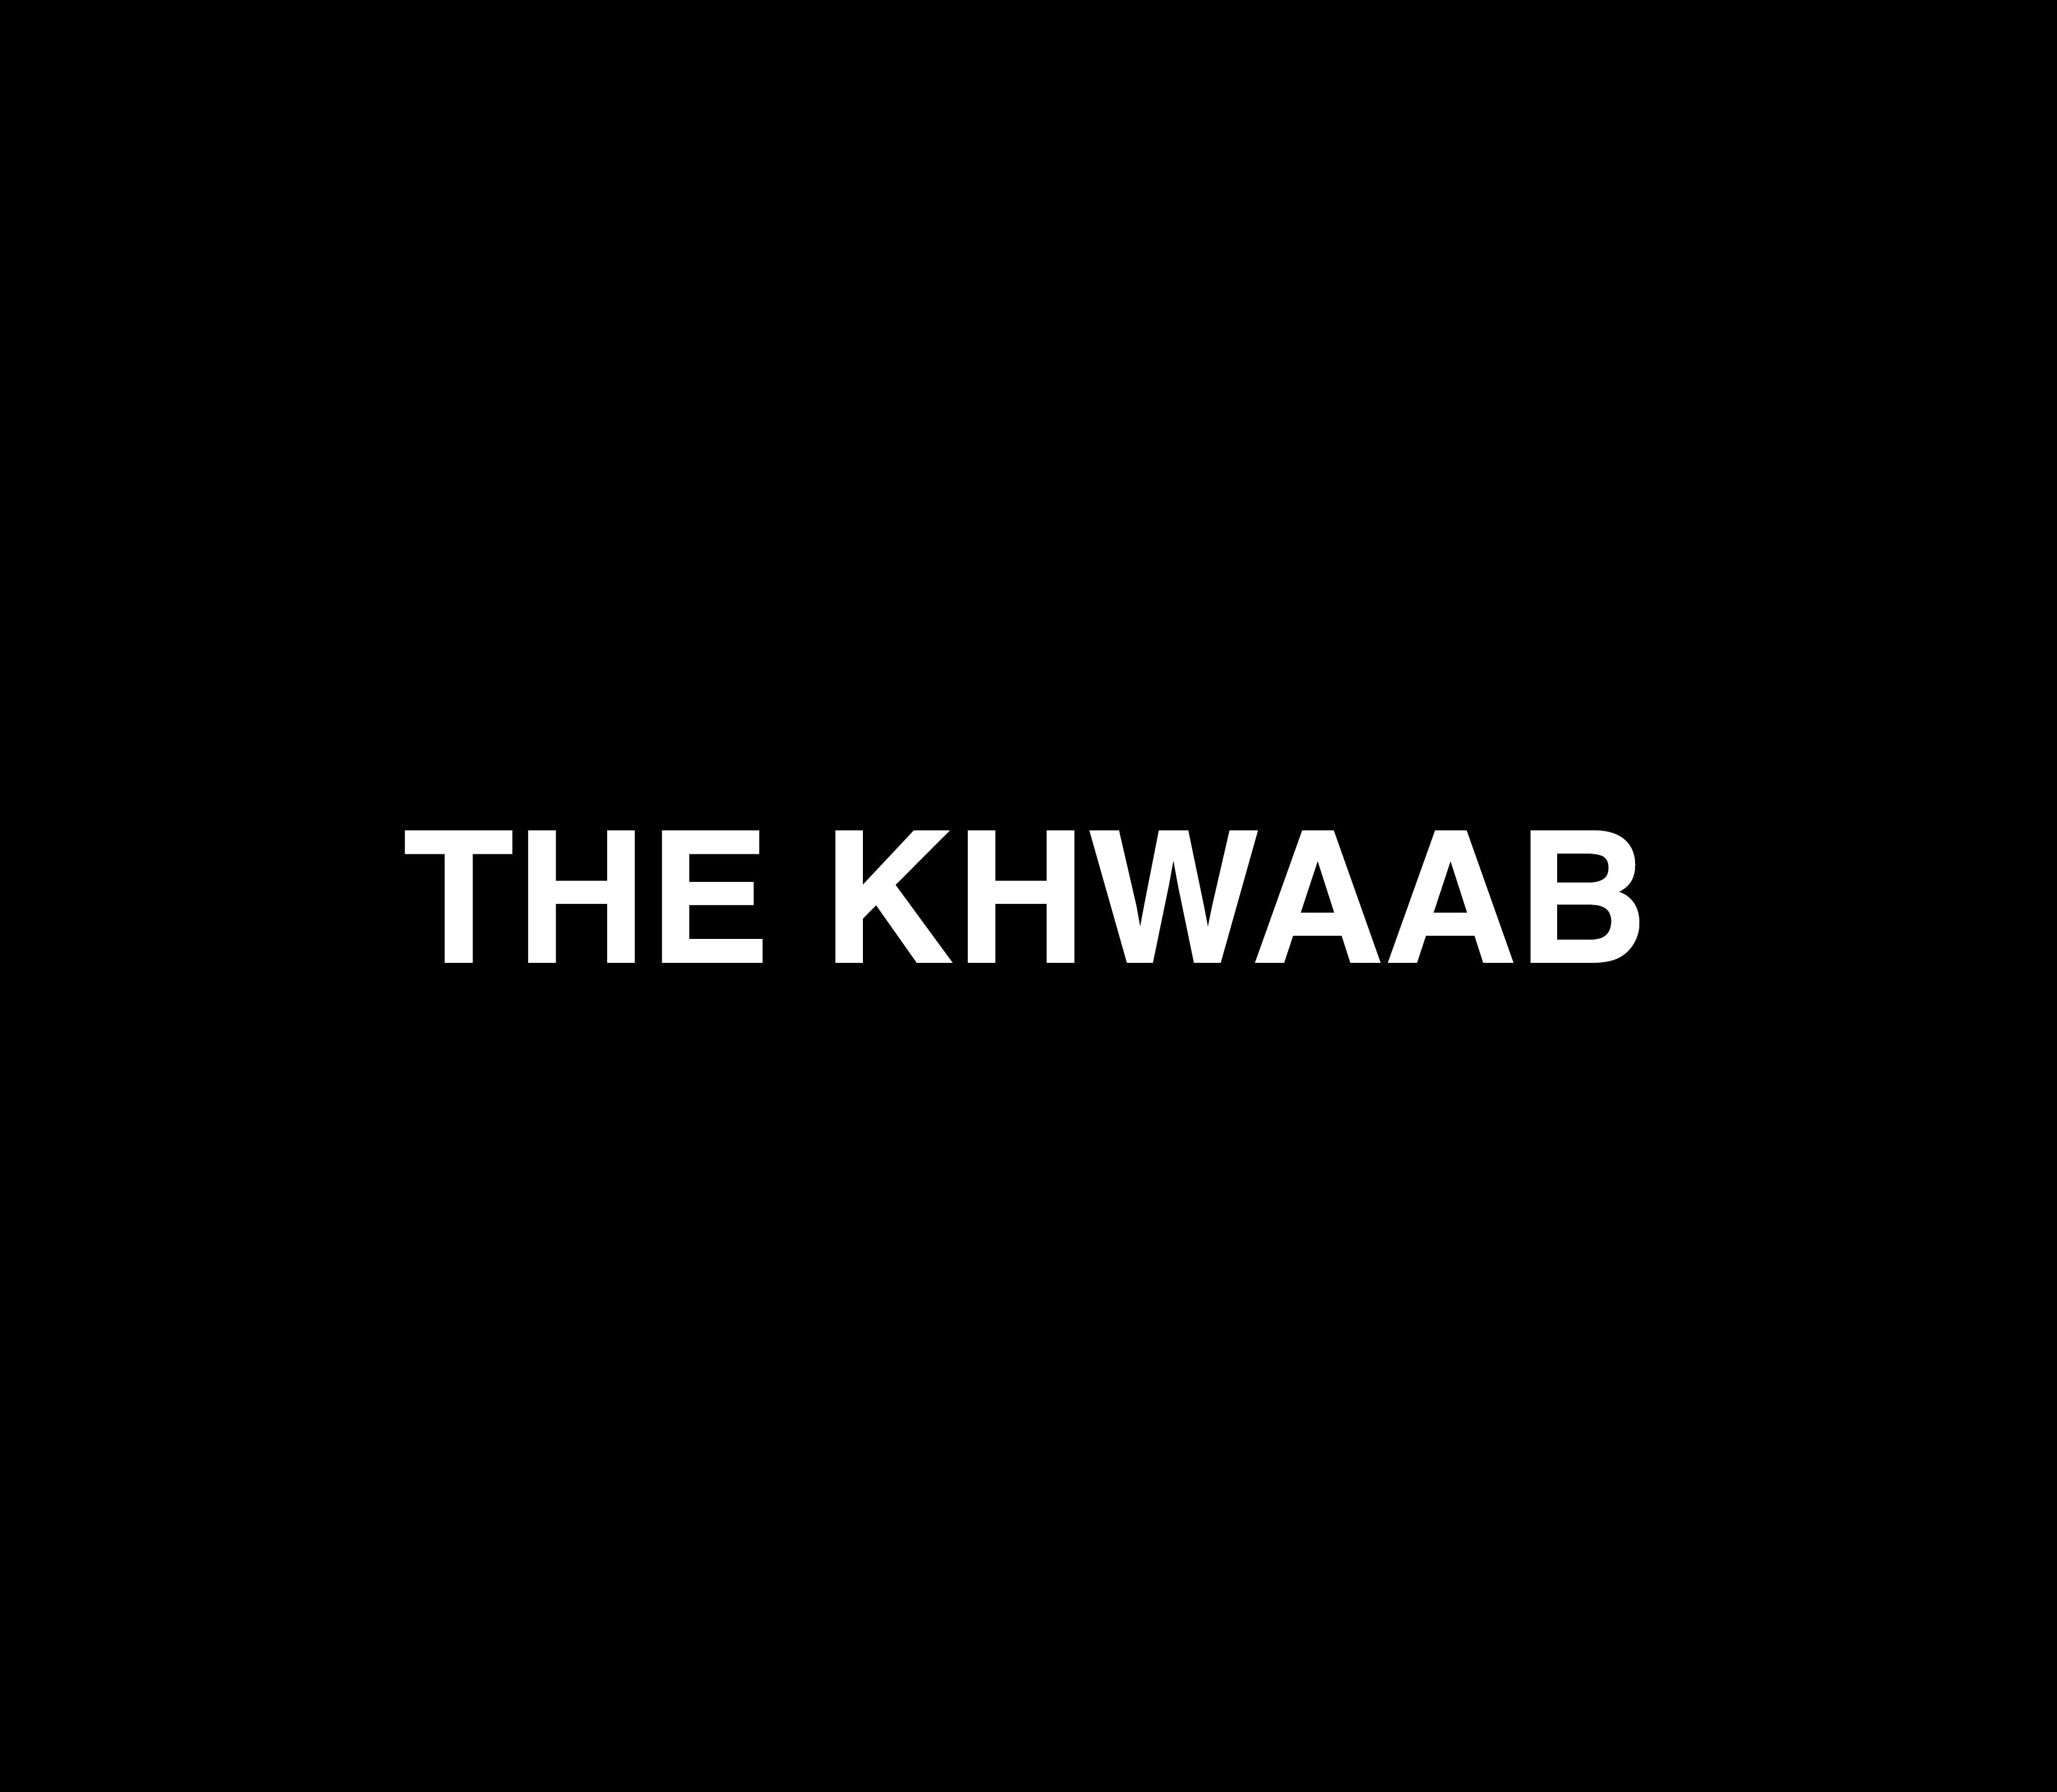 THE KHWAAB